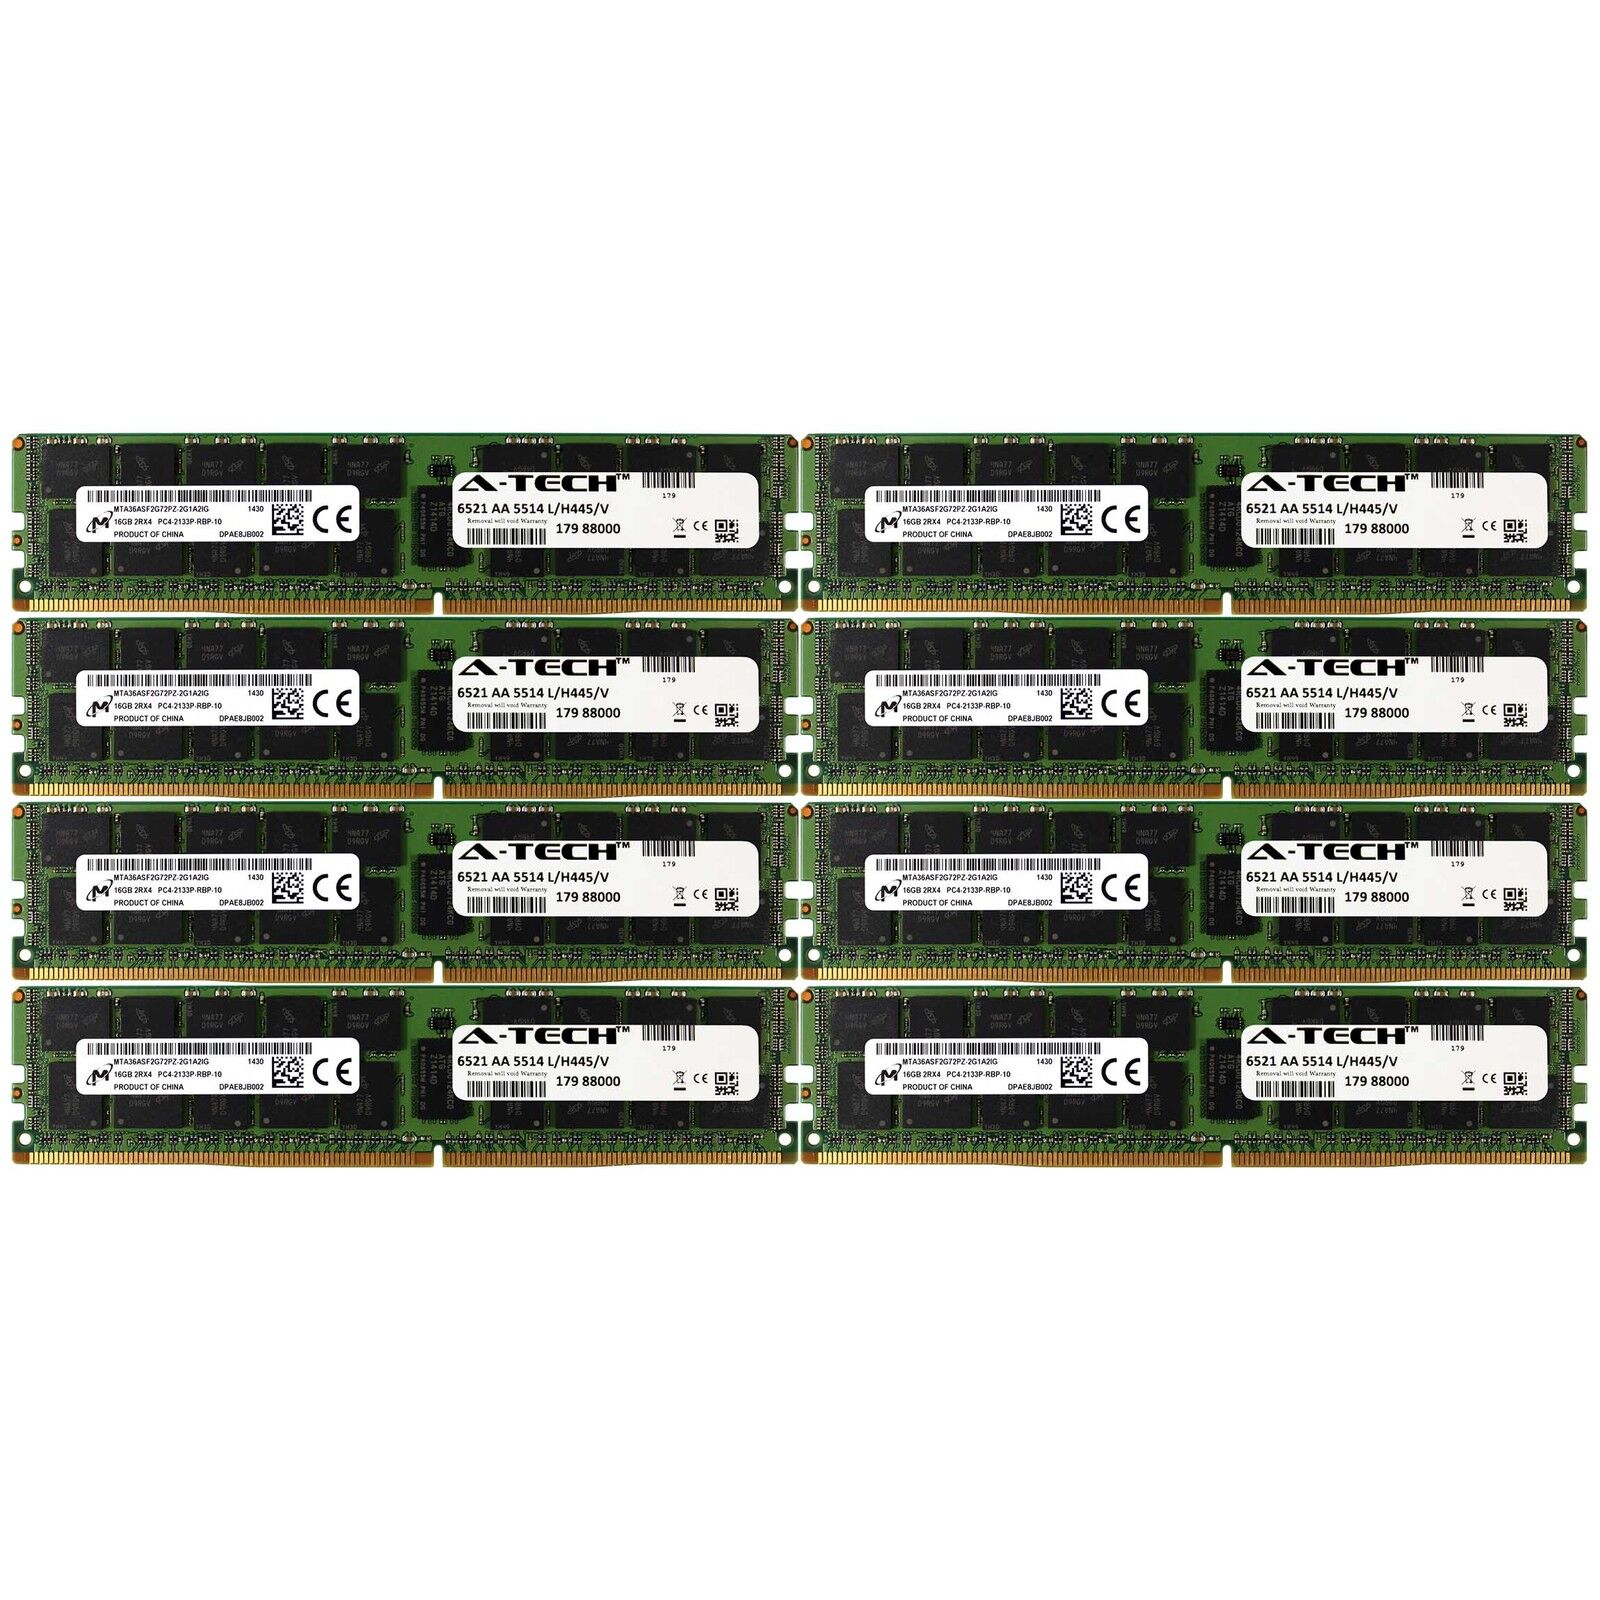 DDR4 2133MHz Micron 128GB Kit 8x 16GB HP Cloudline CL2100 726719-B21 Memory RAM